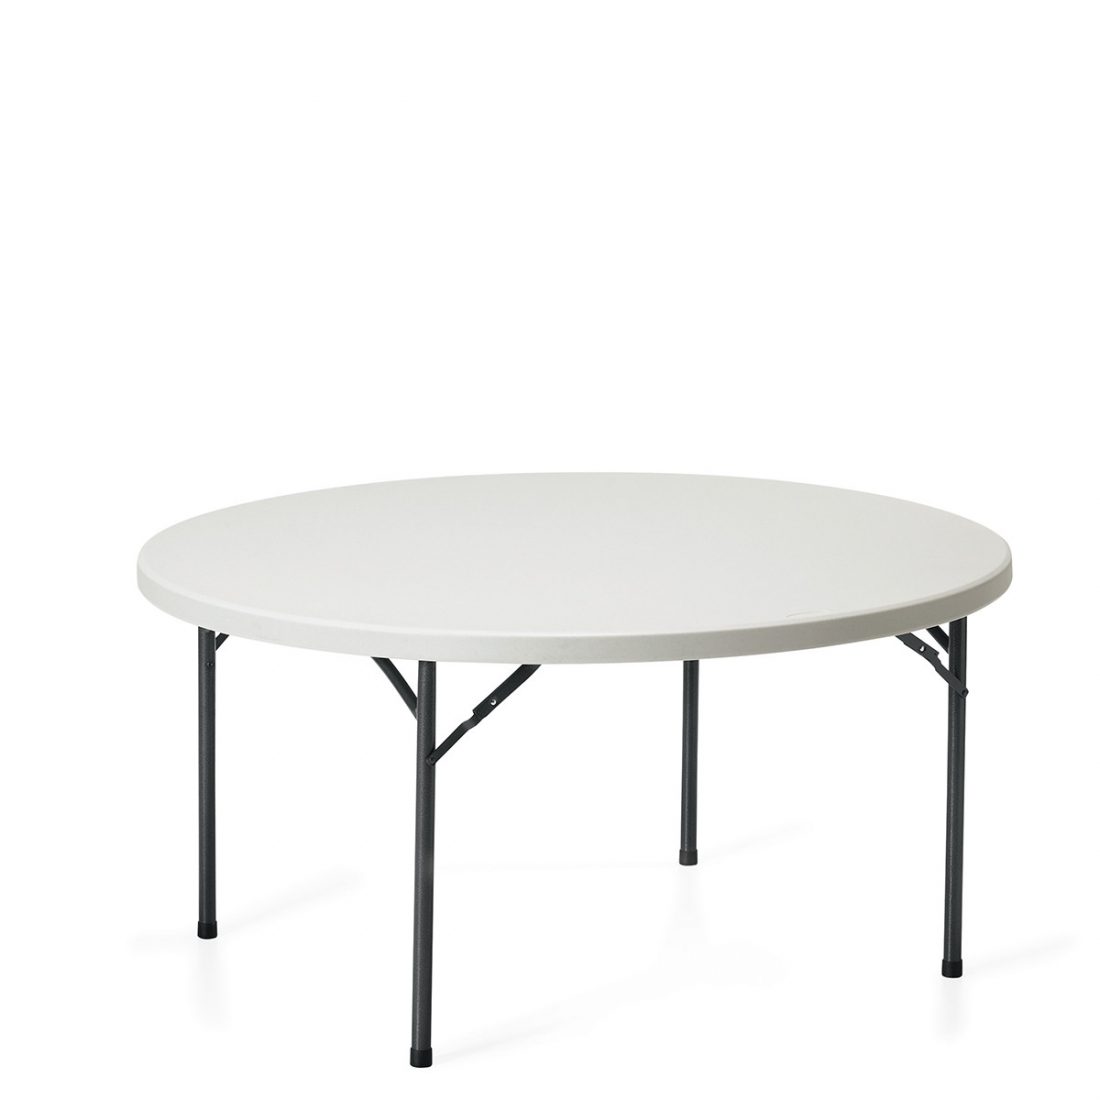 Lite-Lift II | 60" Round Folding Table